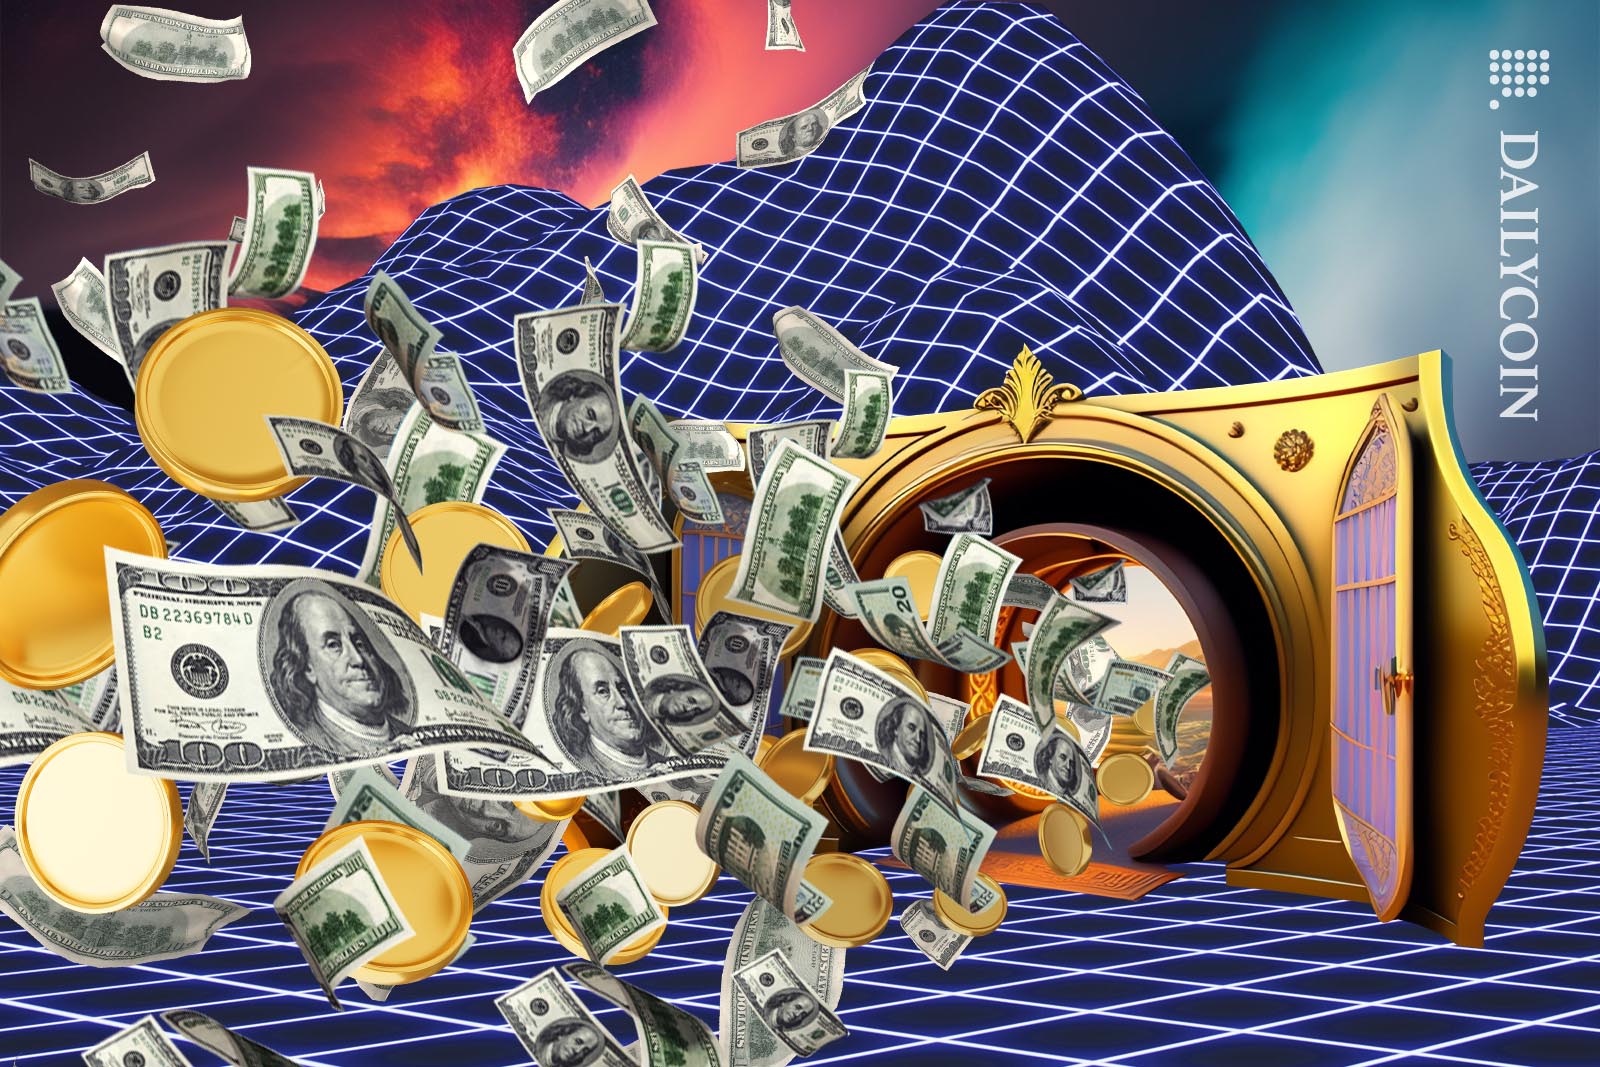 Gate.io registrerer $160 millioner i udbetalinger som multichain-rygter